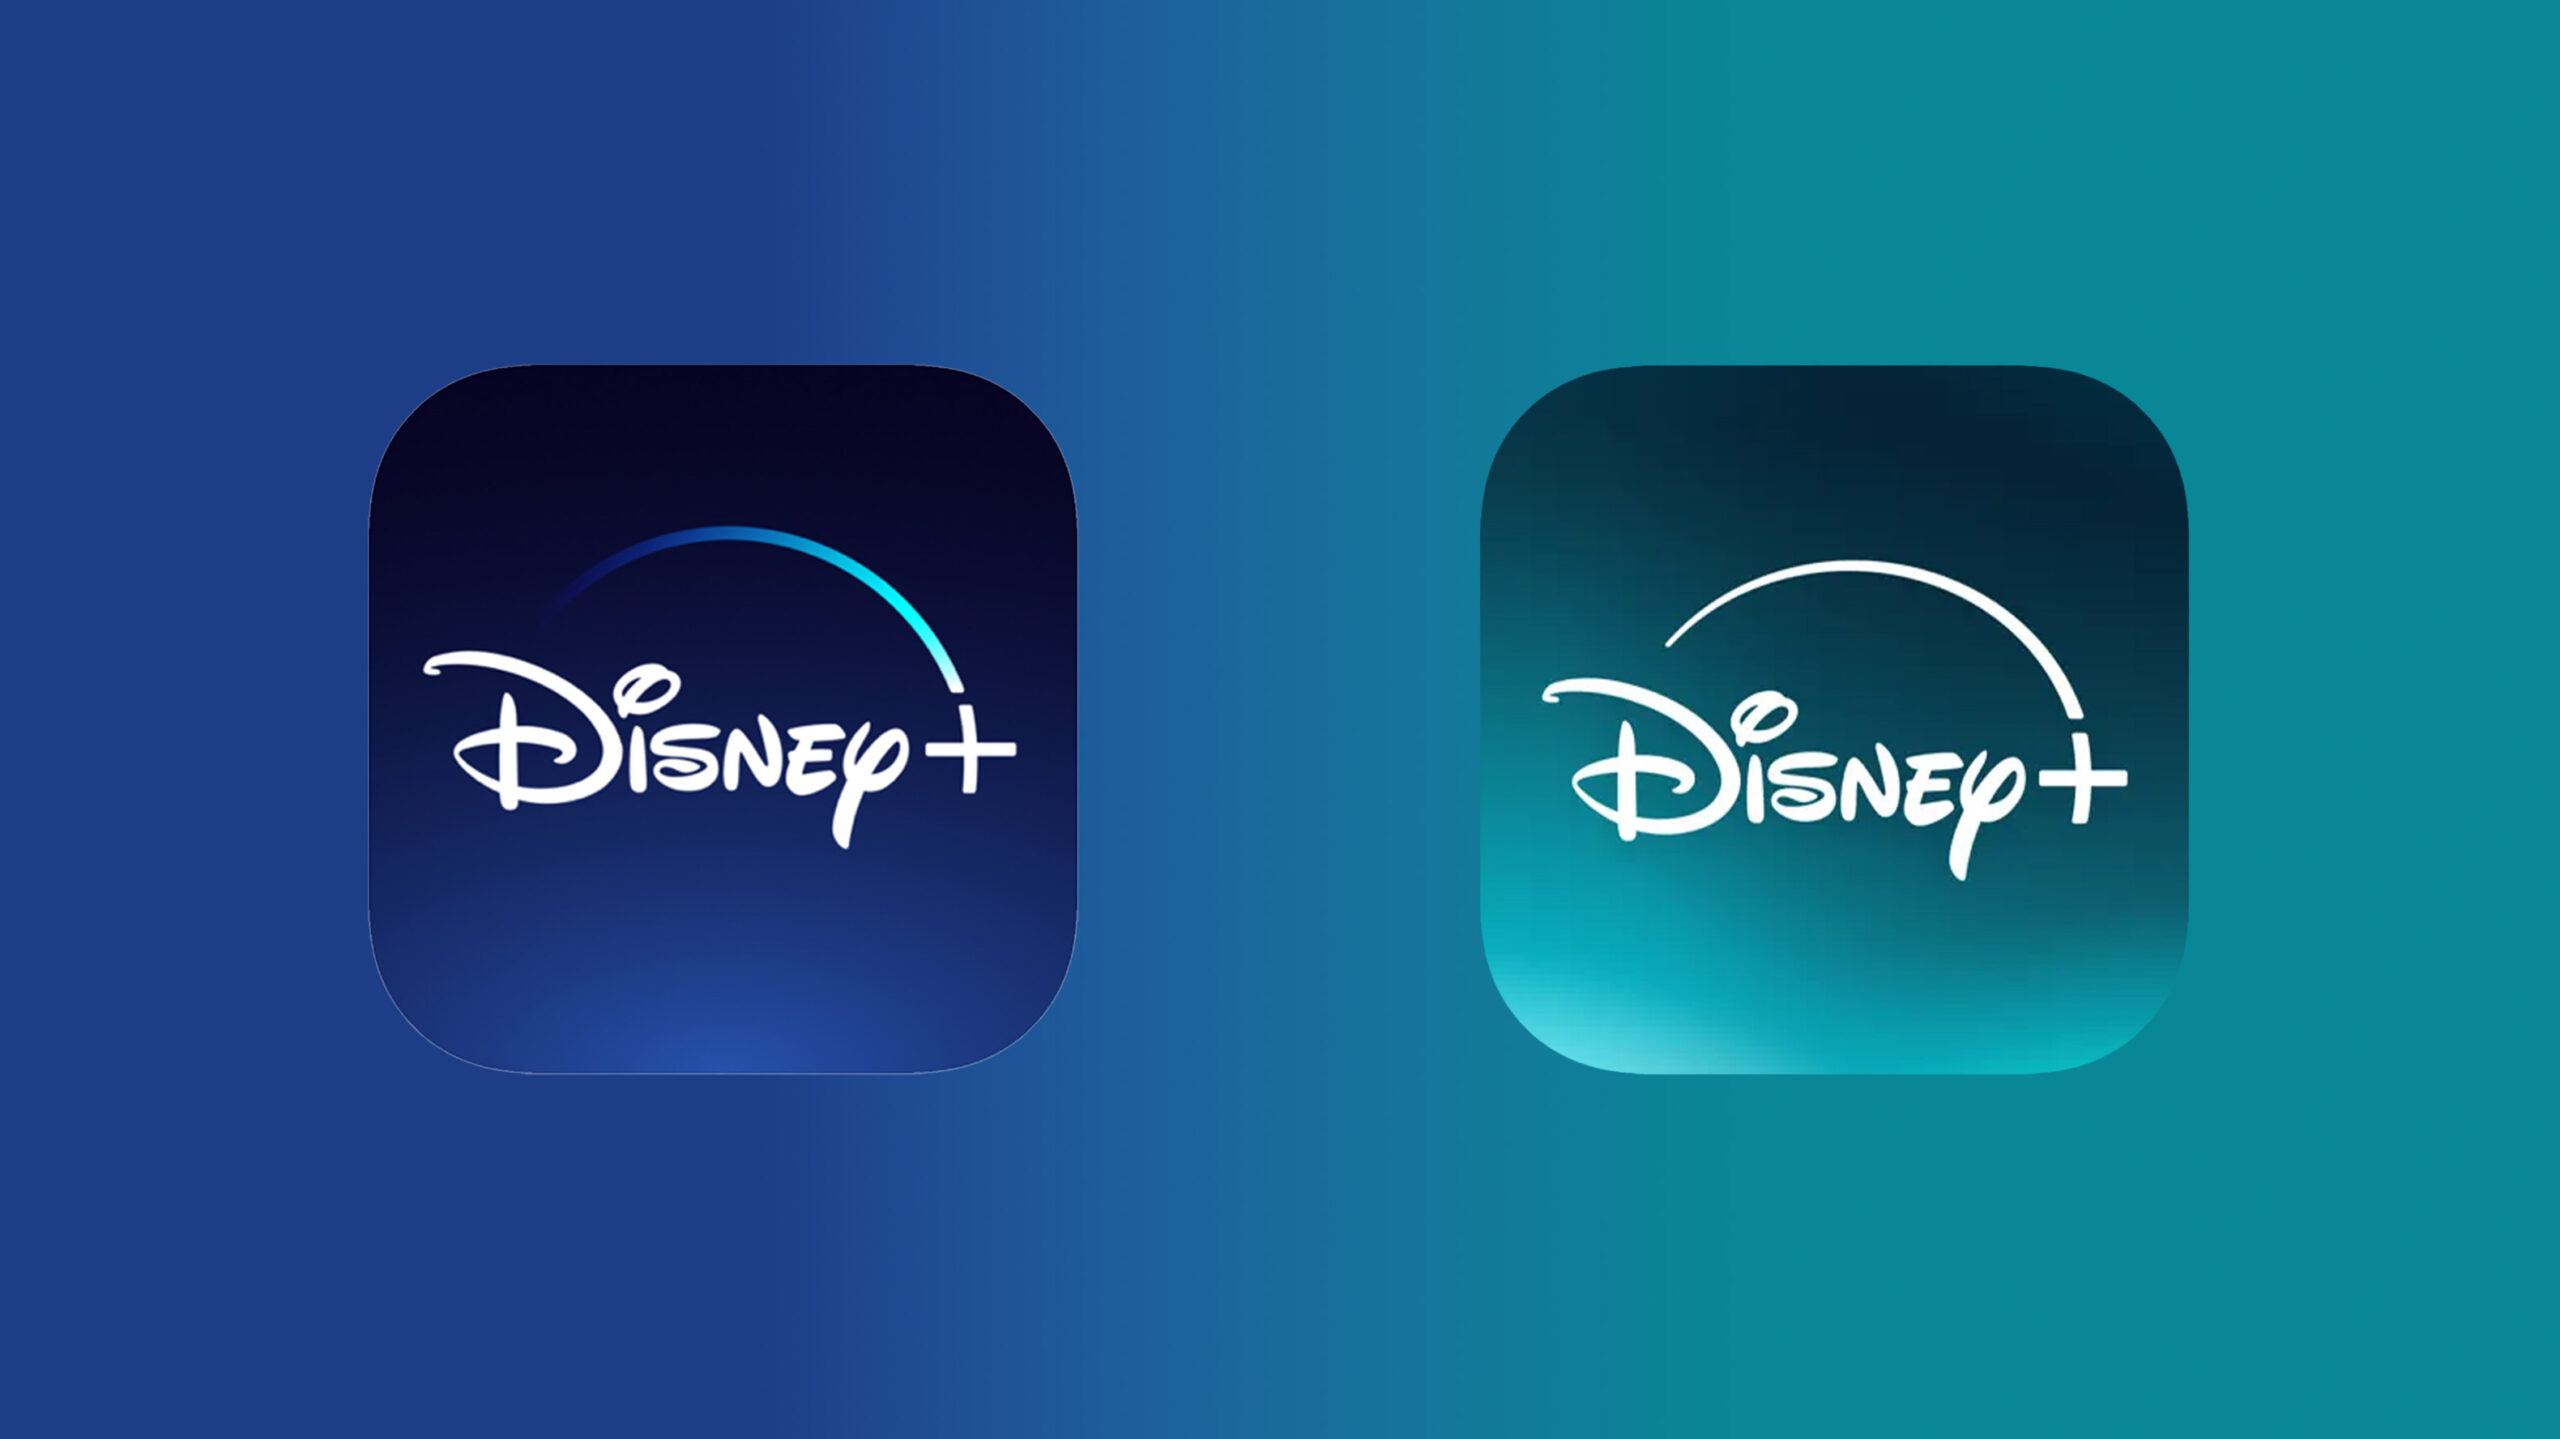 Disney+ logo change comparison